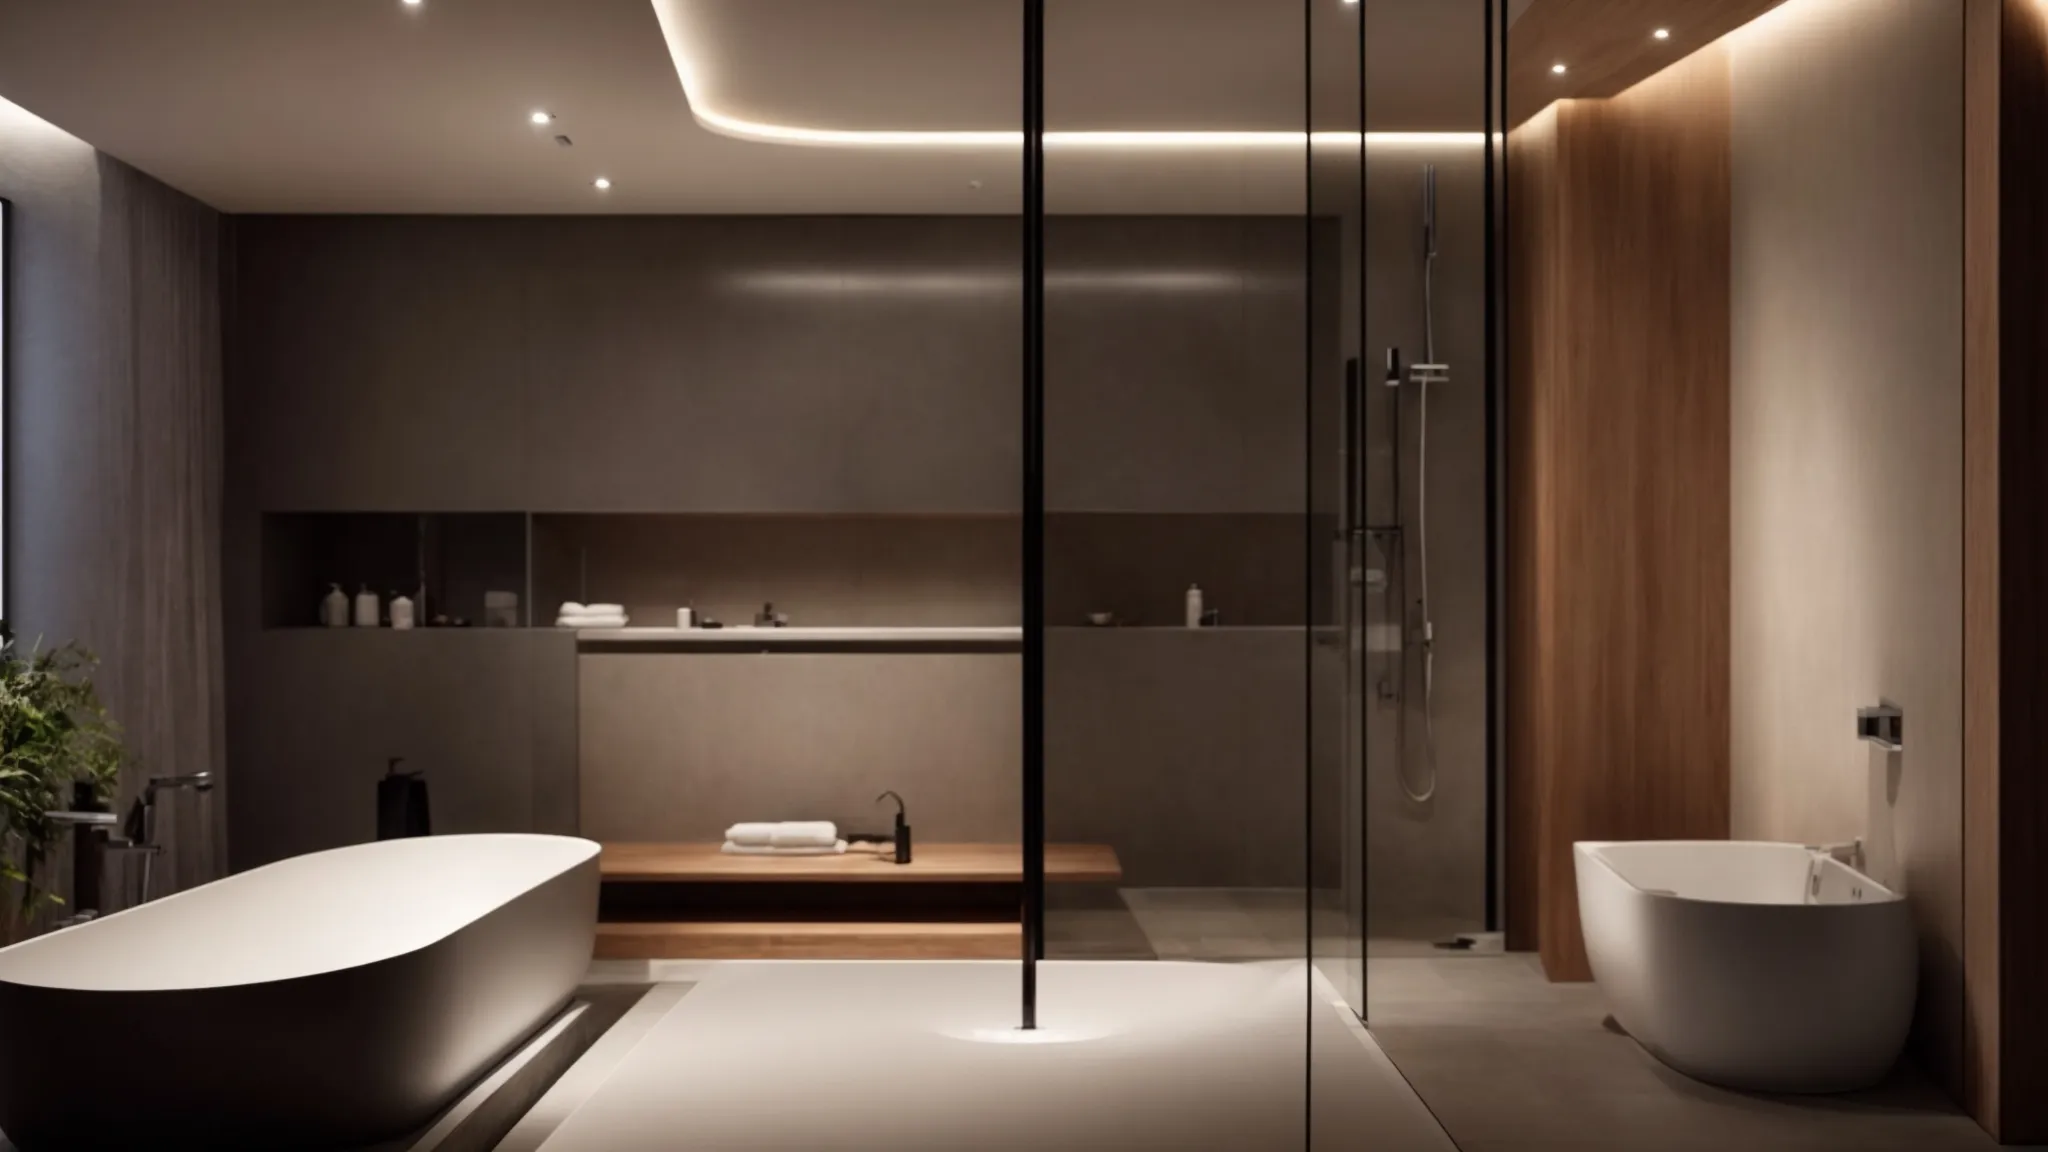 a modern bathroom illuminated with soft, ambient lighting features a sleek, digital shower panel and an elegant freestanding bathtub.